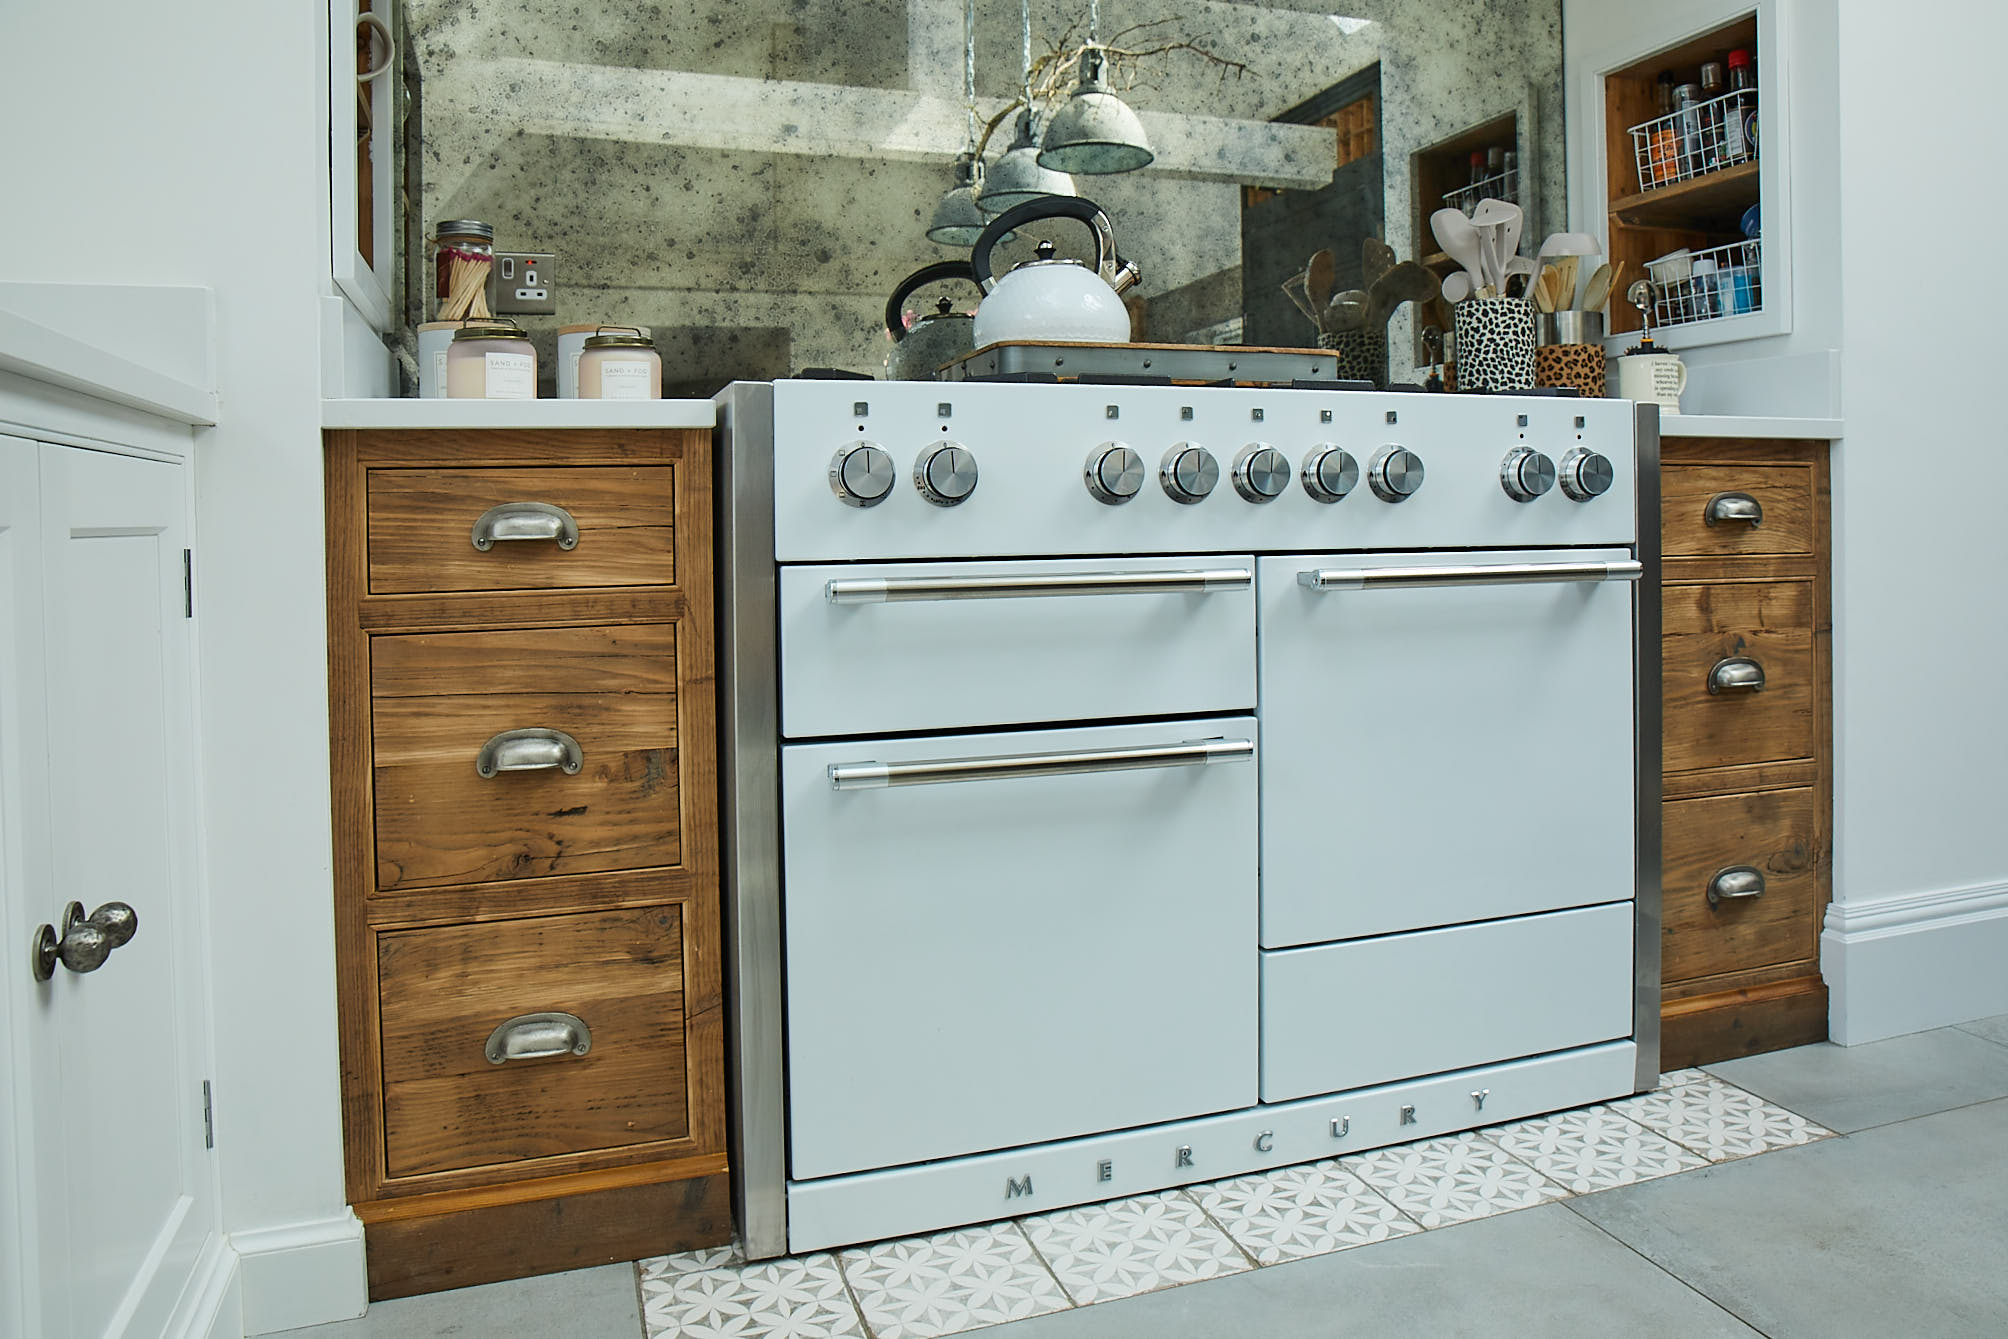 Rustic pan drawers beside white range cooker with antique mirror backsplash